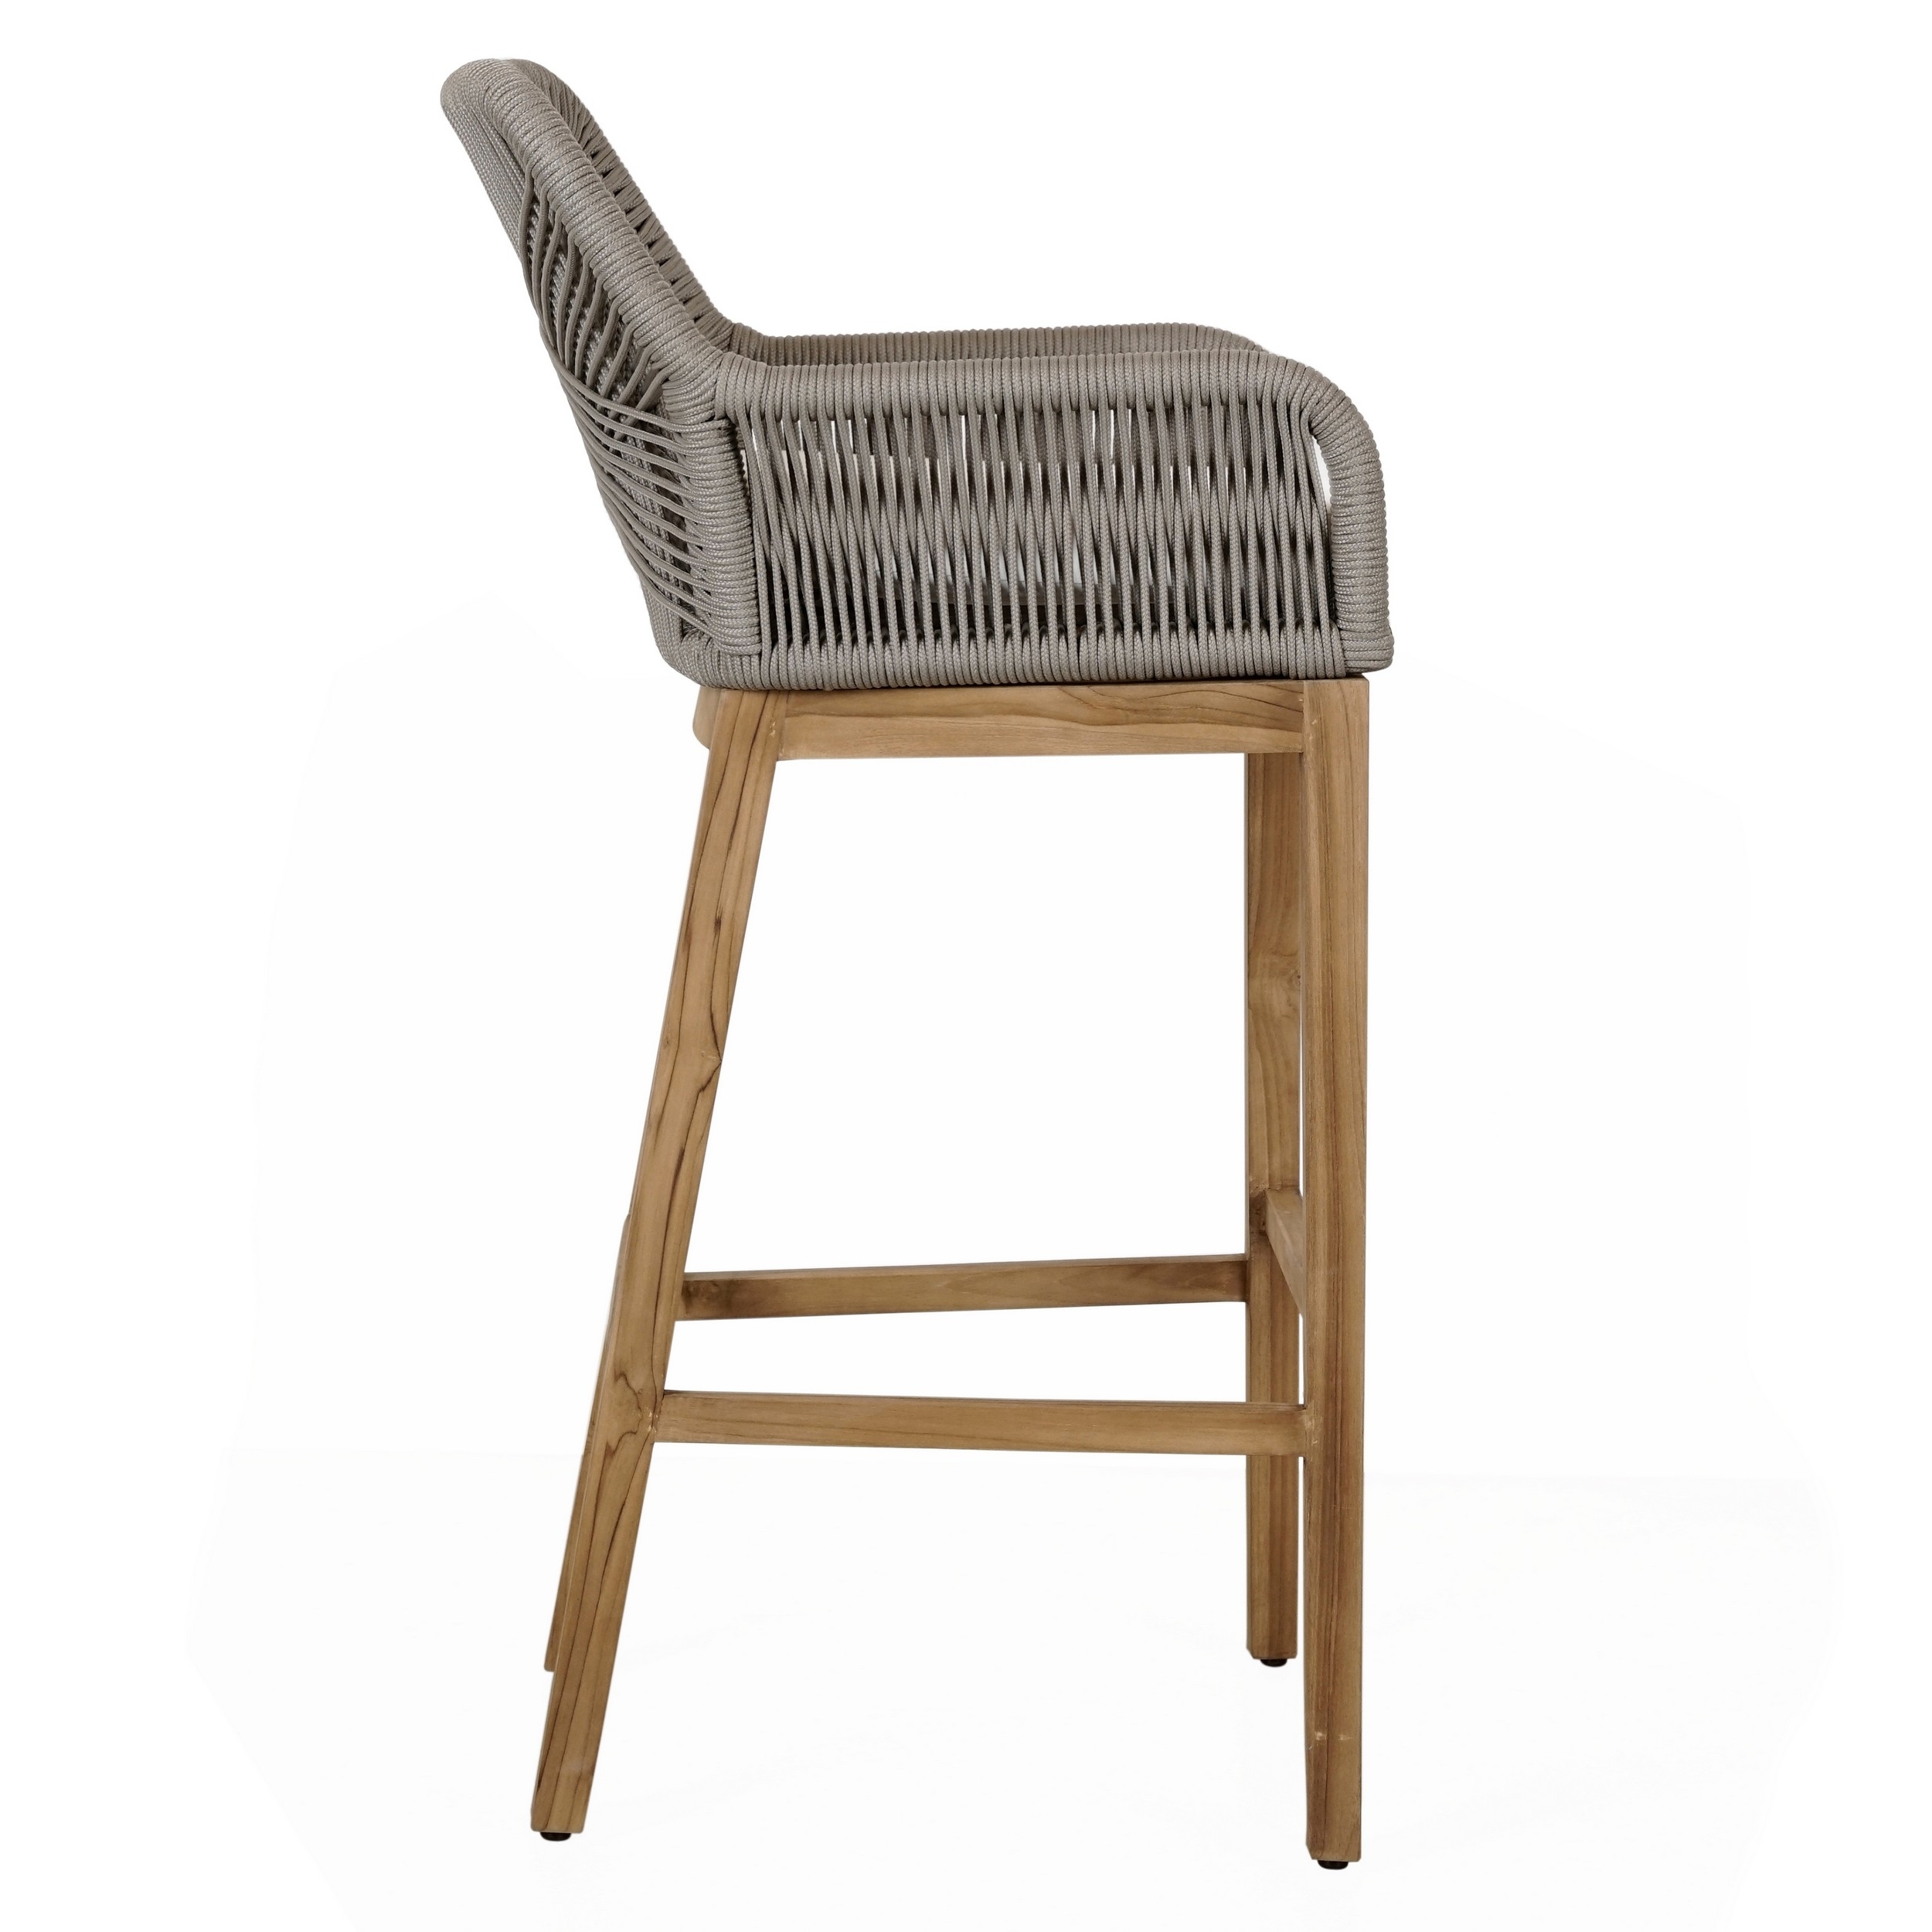 Navi 33 Inch Outdoor Barstool Chair, Woven Rope Crossed, Gray, Brown Teak -Saltoro Sherpi